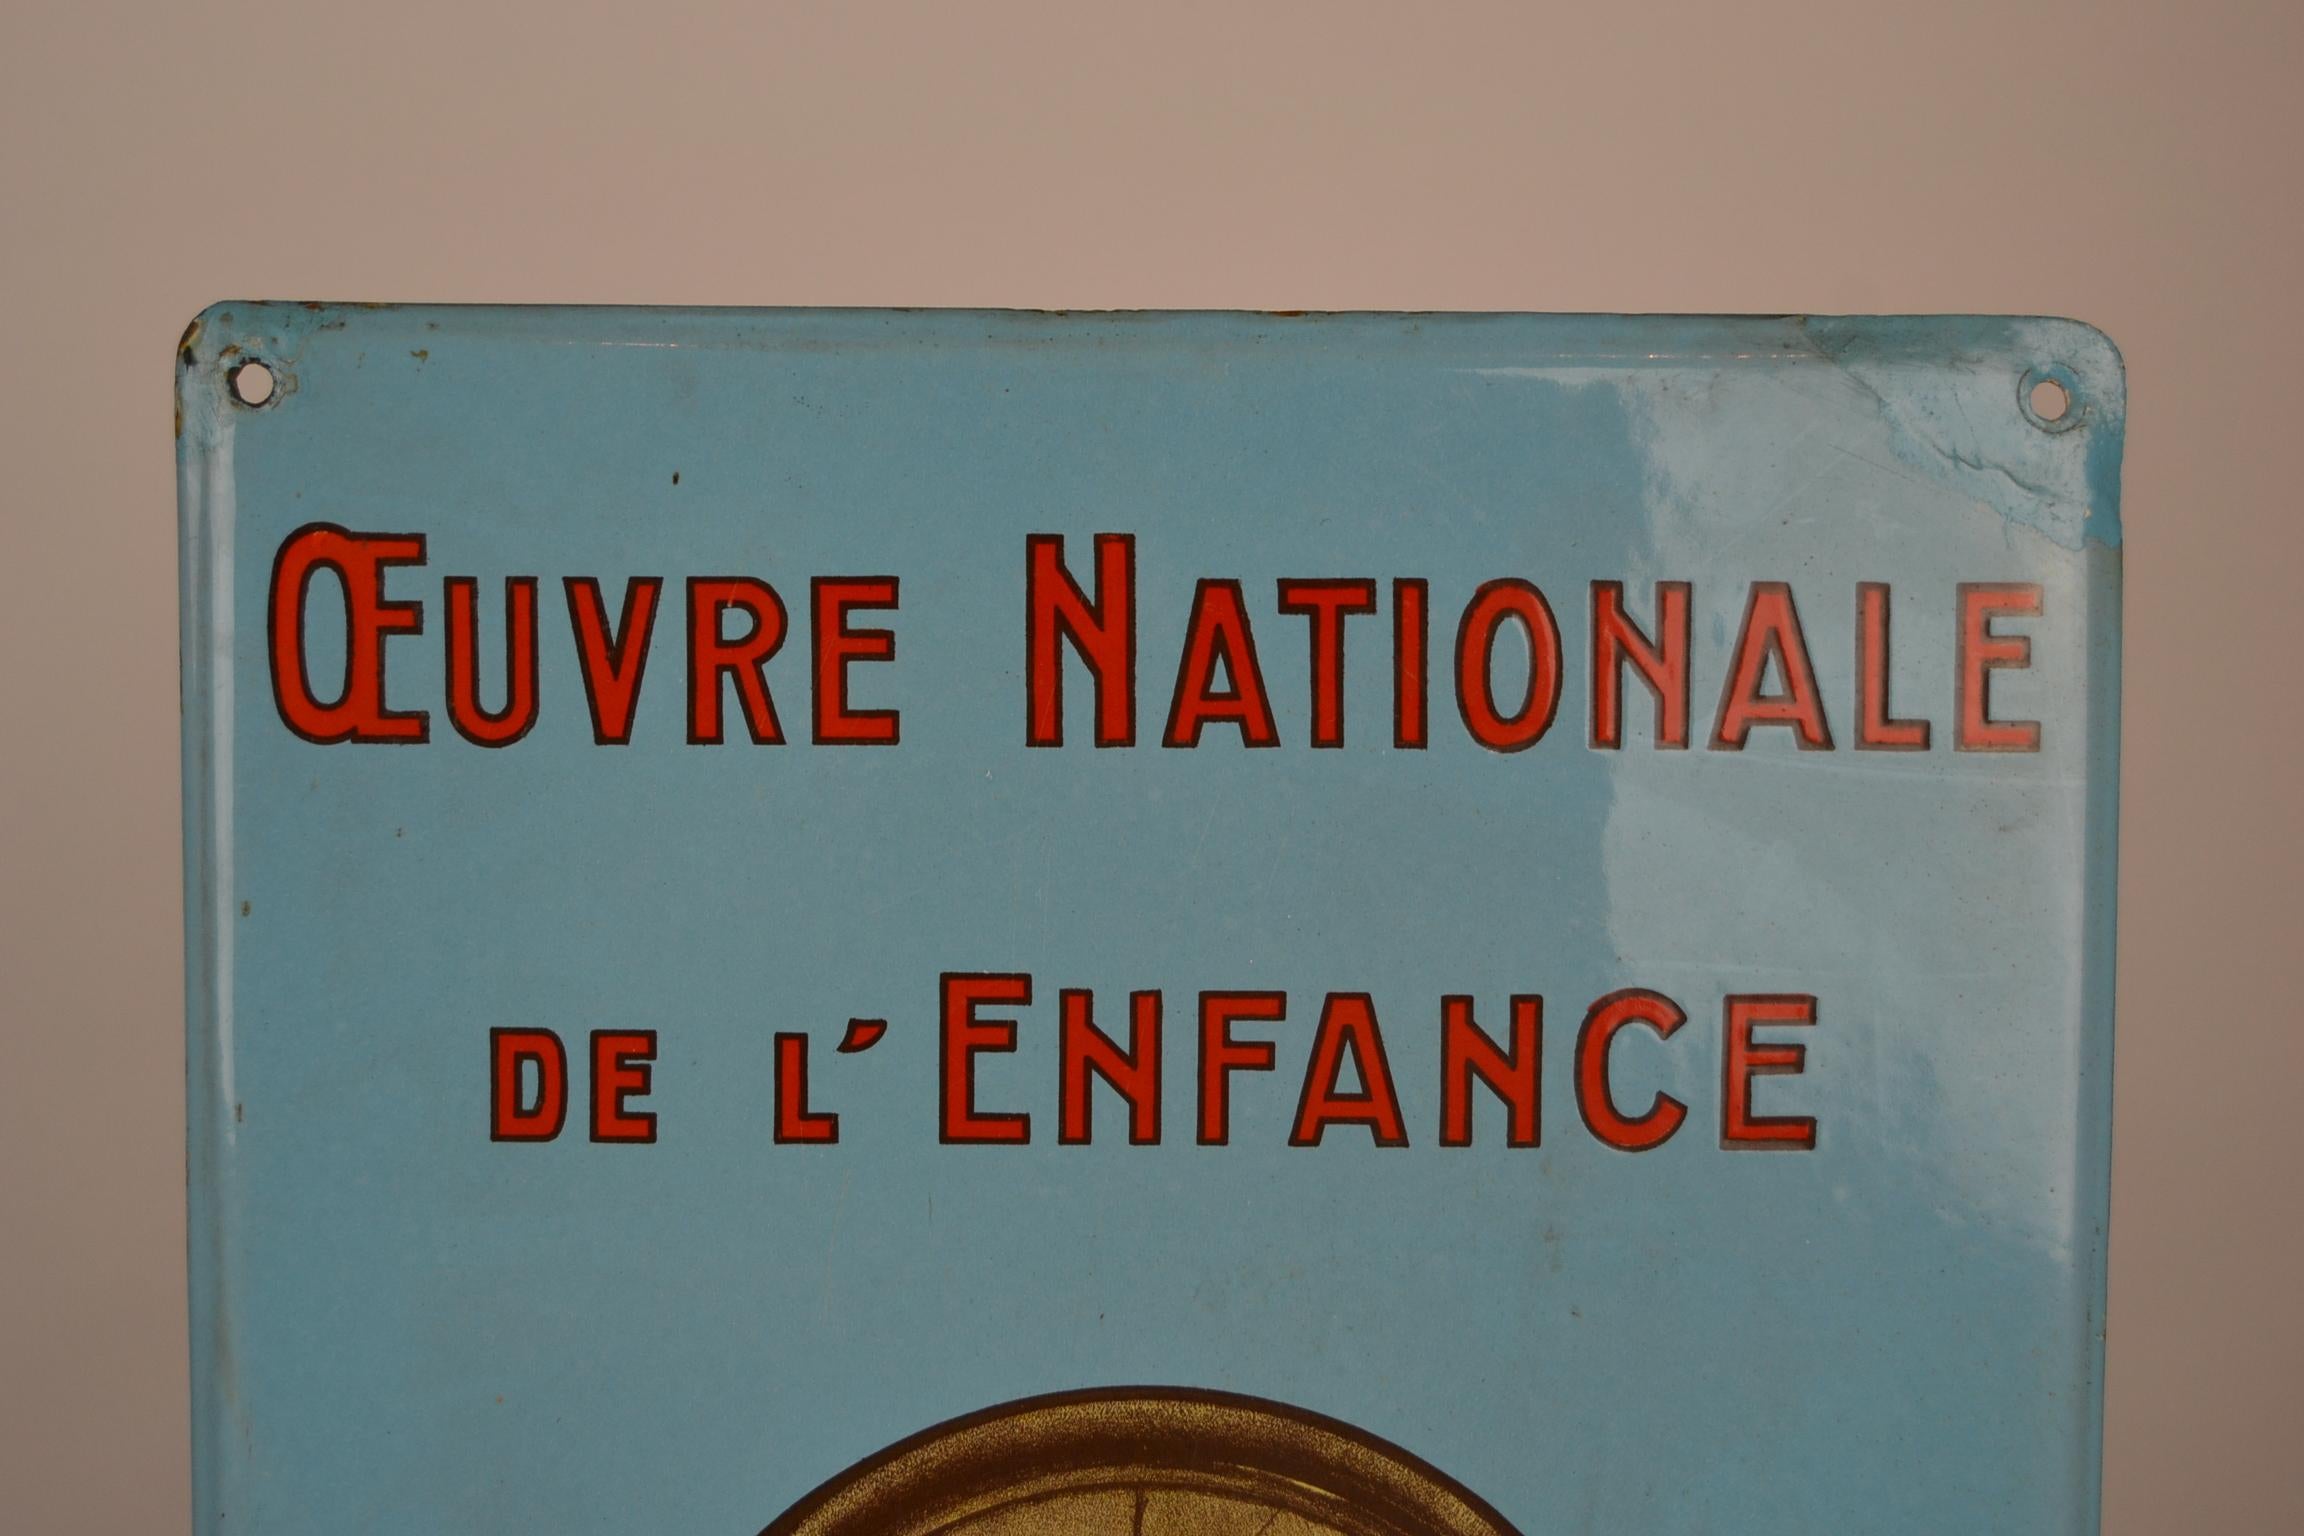 20th Century Vintage Enamel Advertising Sign, Oeuvre Nationale de L' Enfance